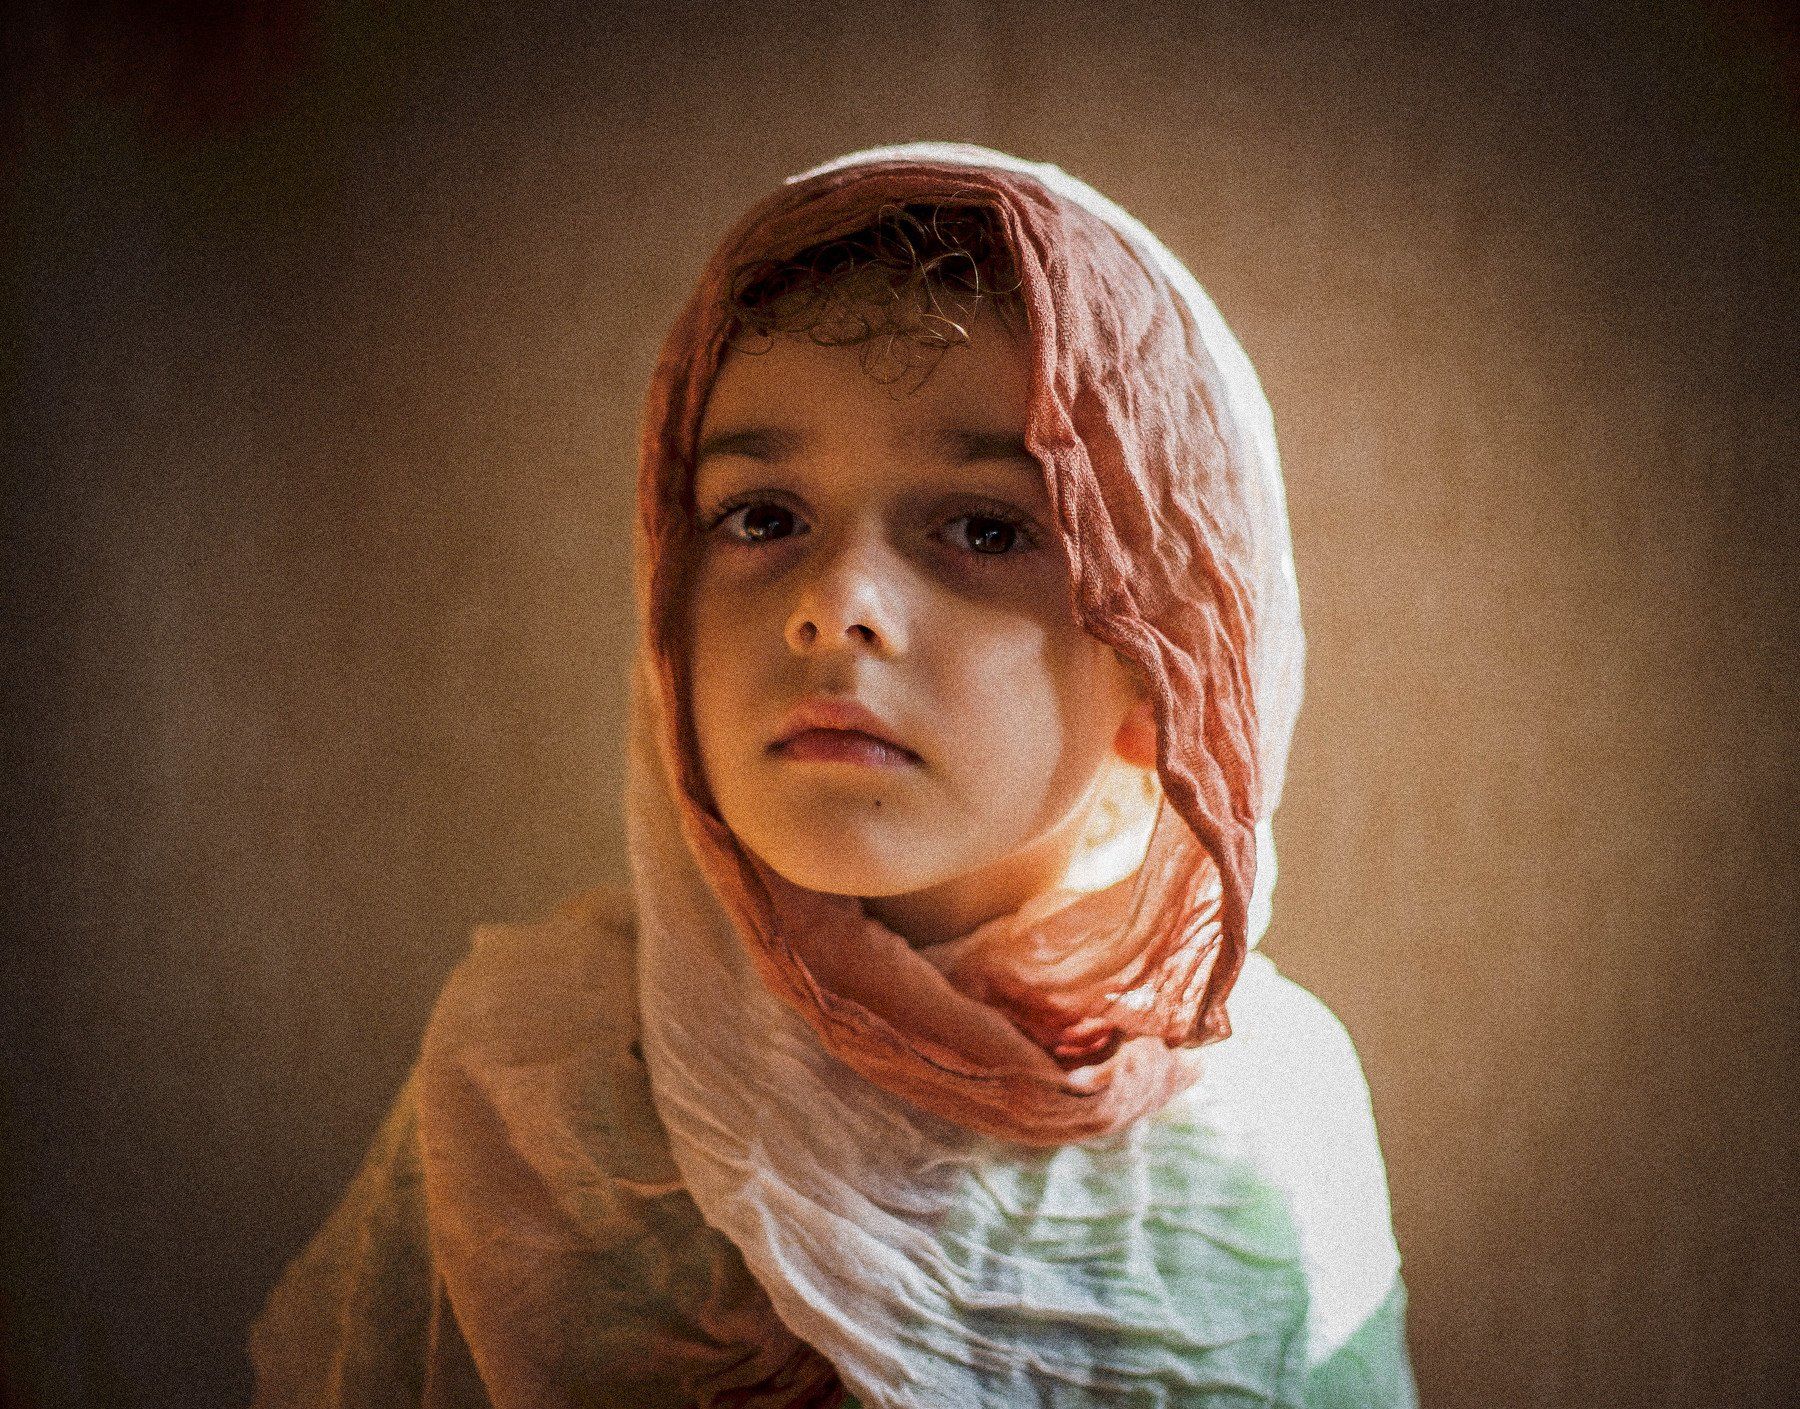 #boy #child #happy #childhood #bestpic #portrait #kids #colors #eyes #love #germany #bremen, Lina Kozi